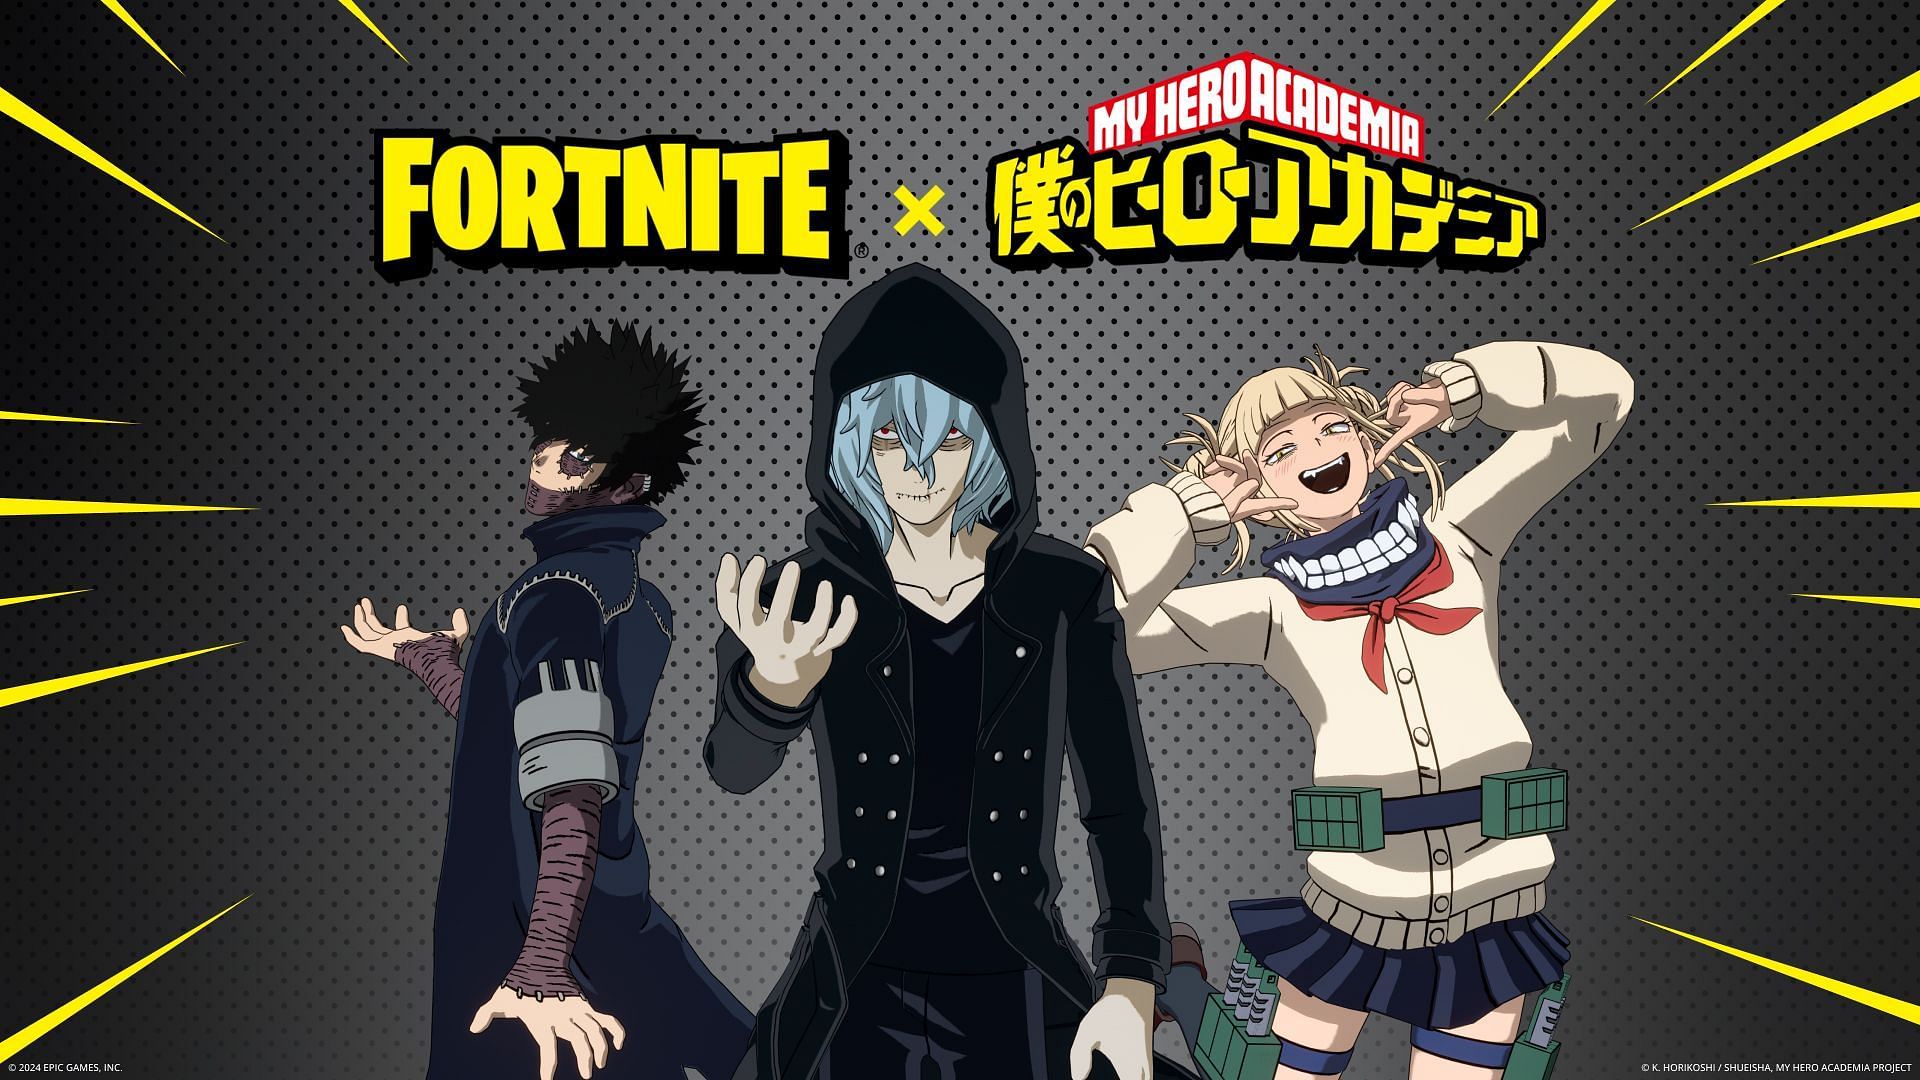 Himiko Toga, Tomura Shigaraki, and Dabi are now in Fortnite (Image via Epic Games/Fortnite)